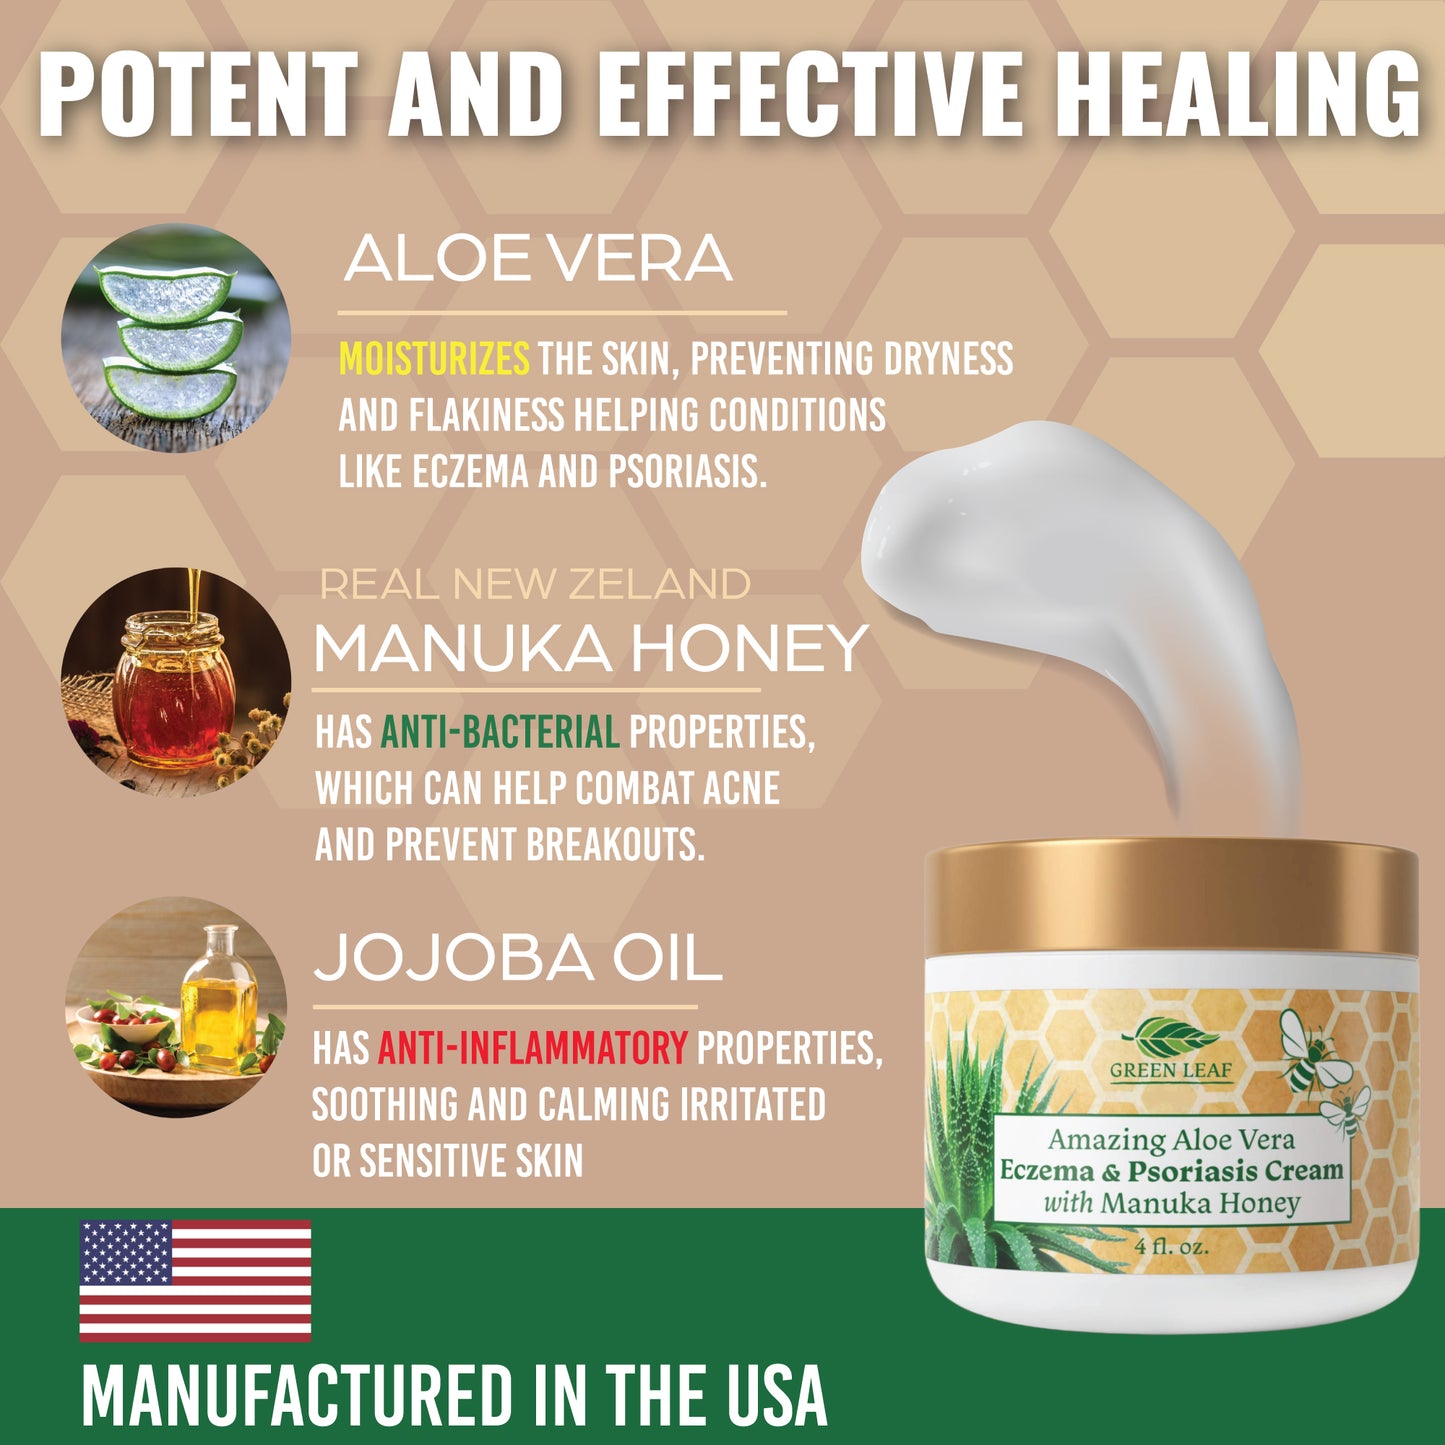 Eczema & Psoriasis Cream with Manuka Honey